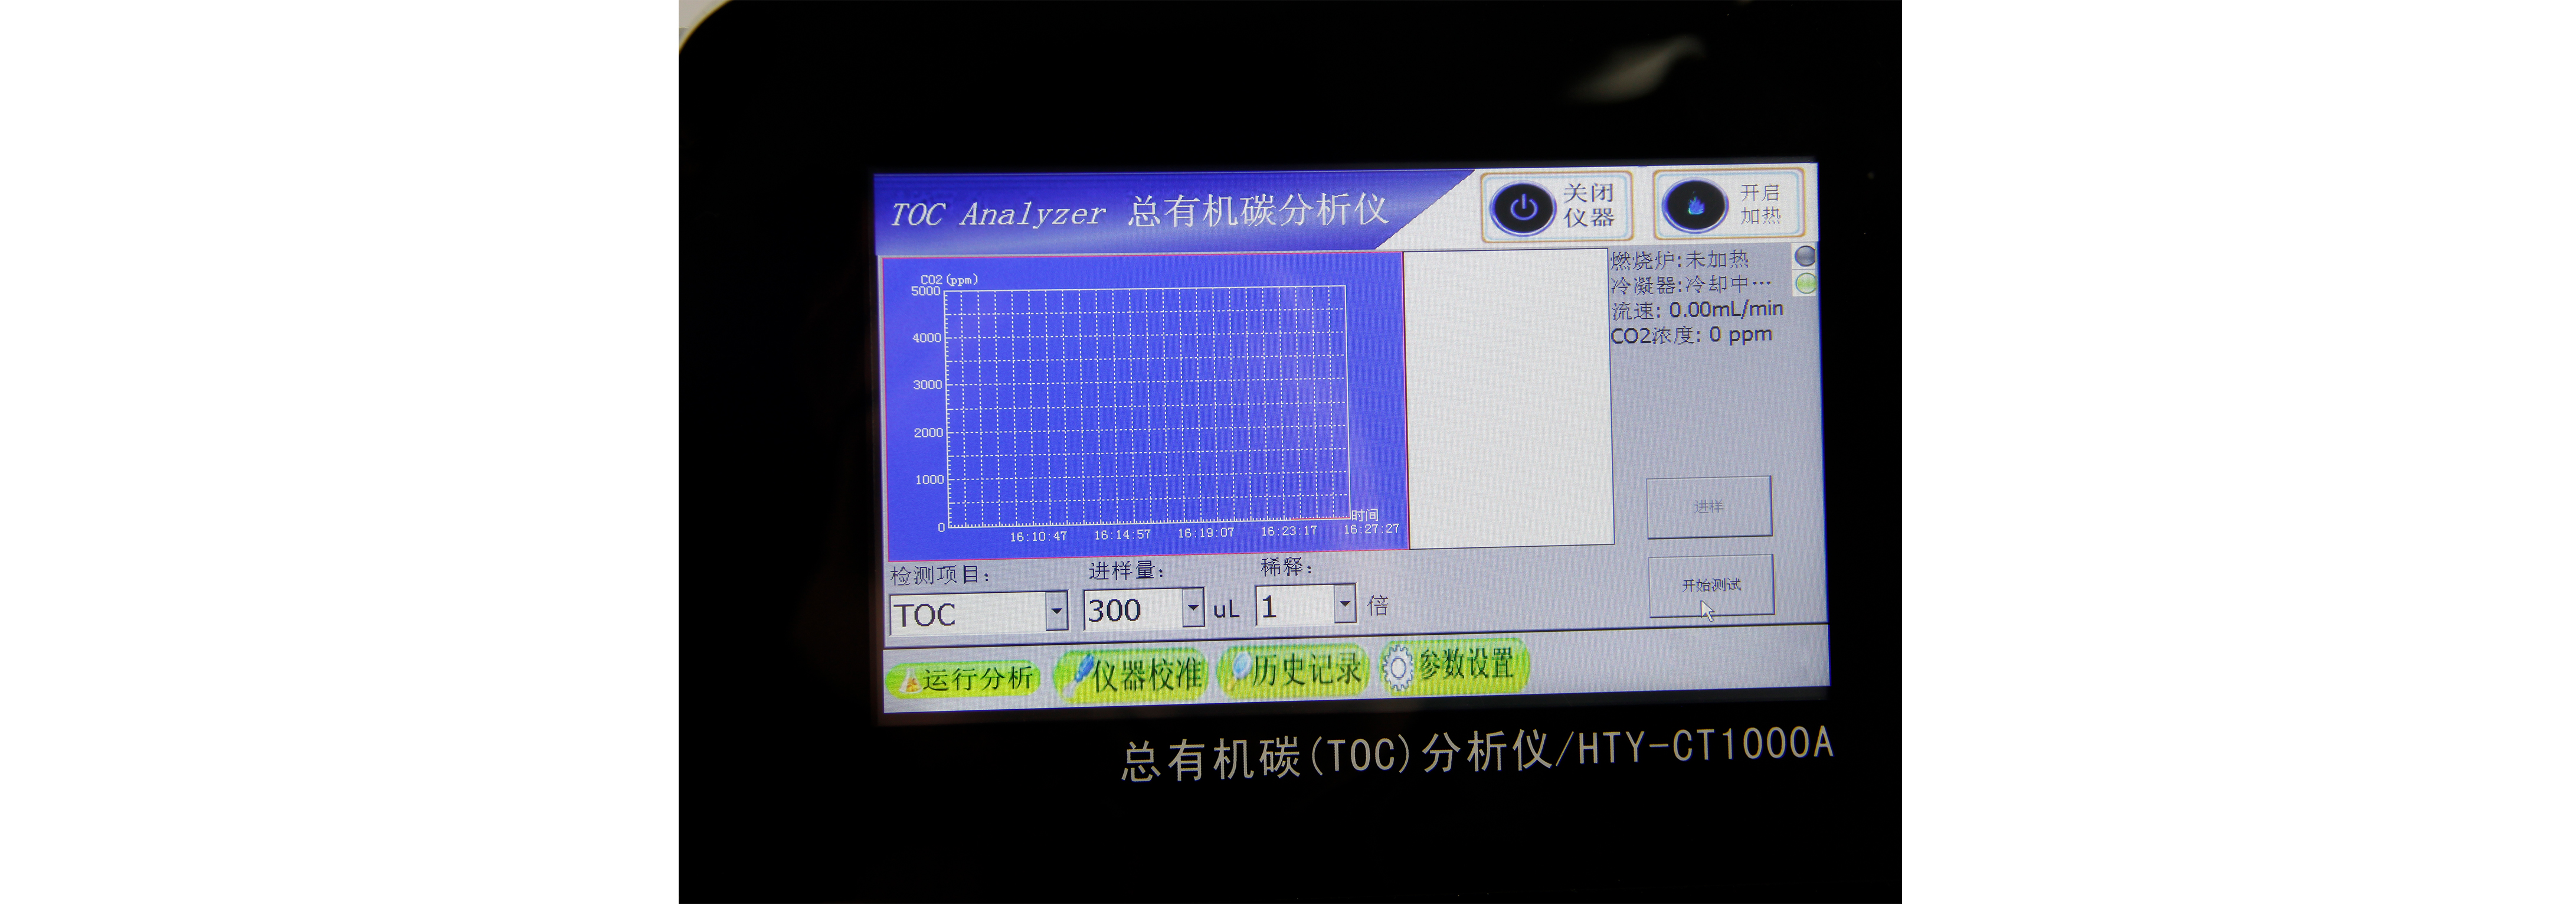 总有机碳分析仪TOC HTY-CT1000M